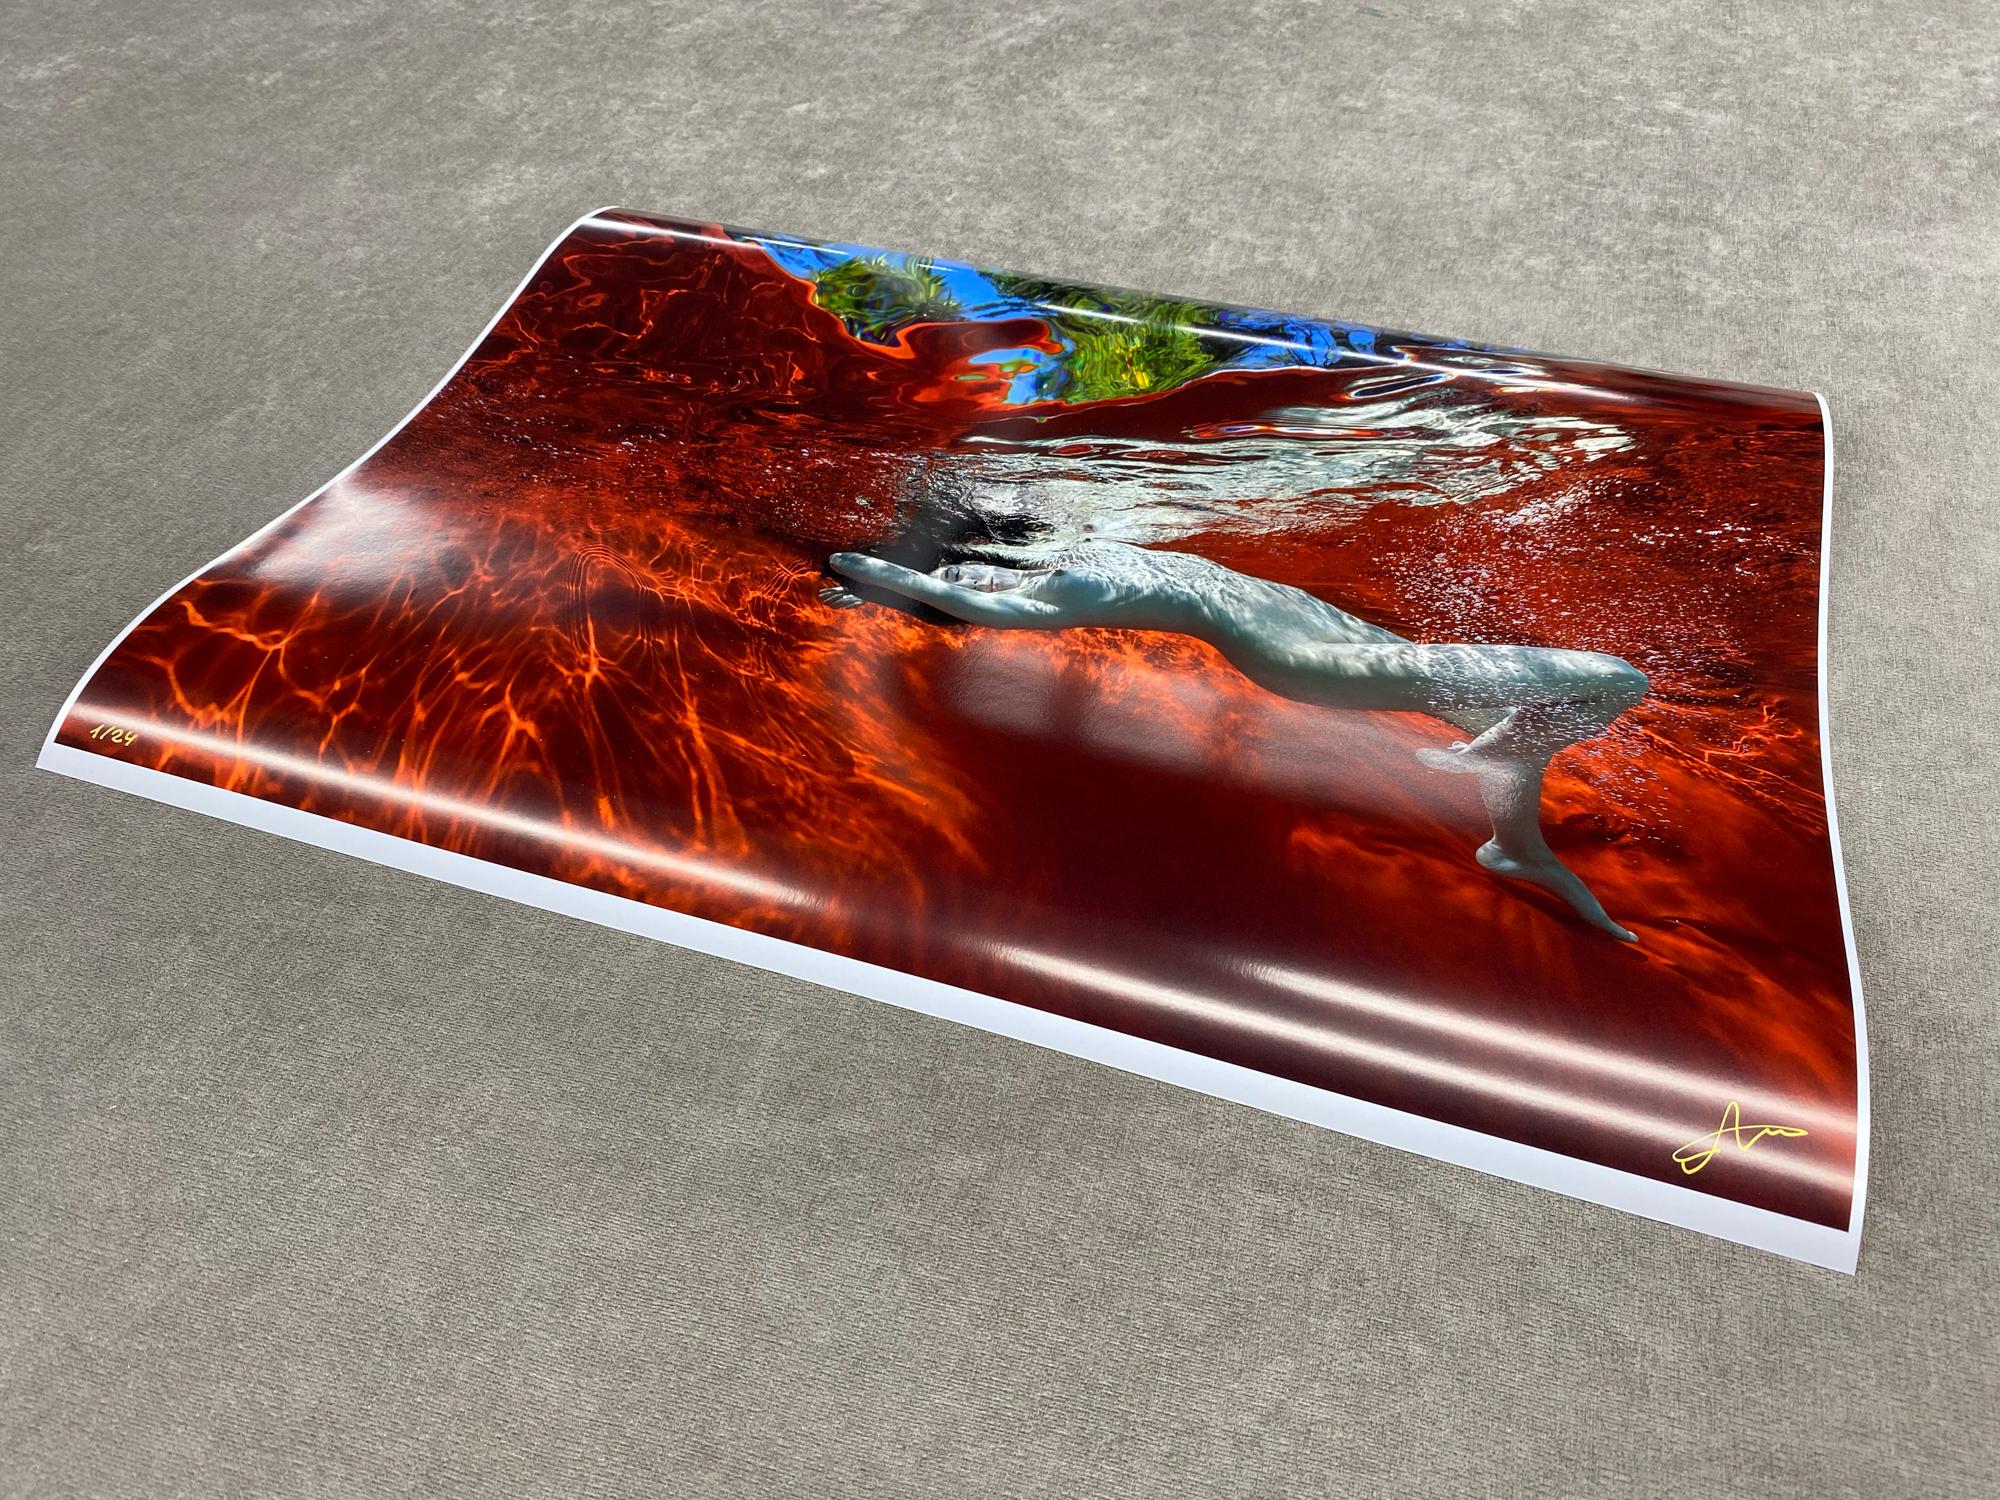 Garden Pool - underwater nude photograph - print on paper 18 x 24